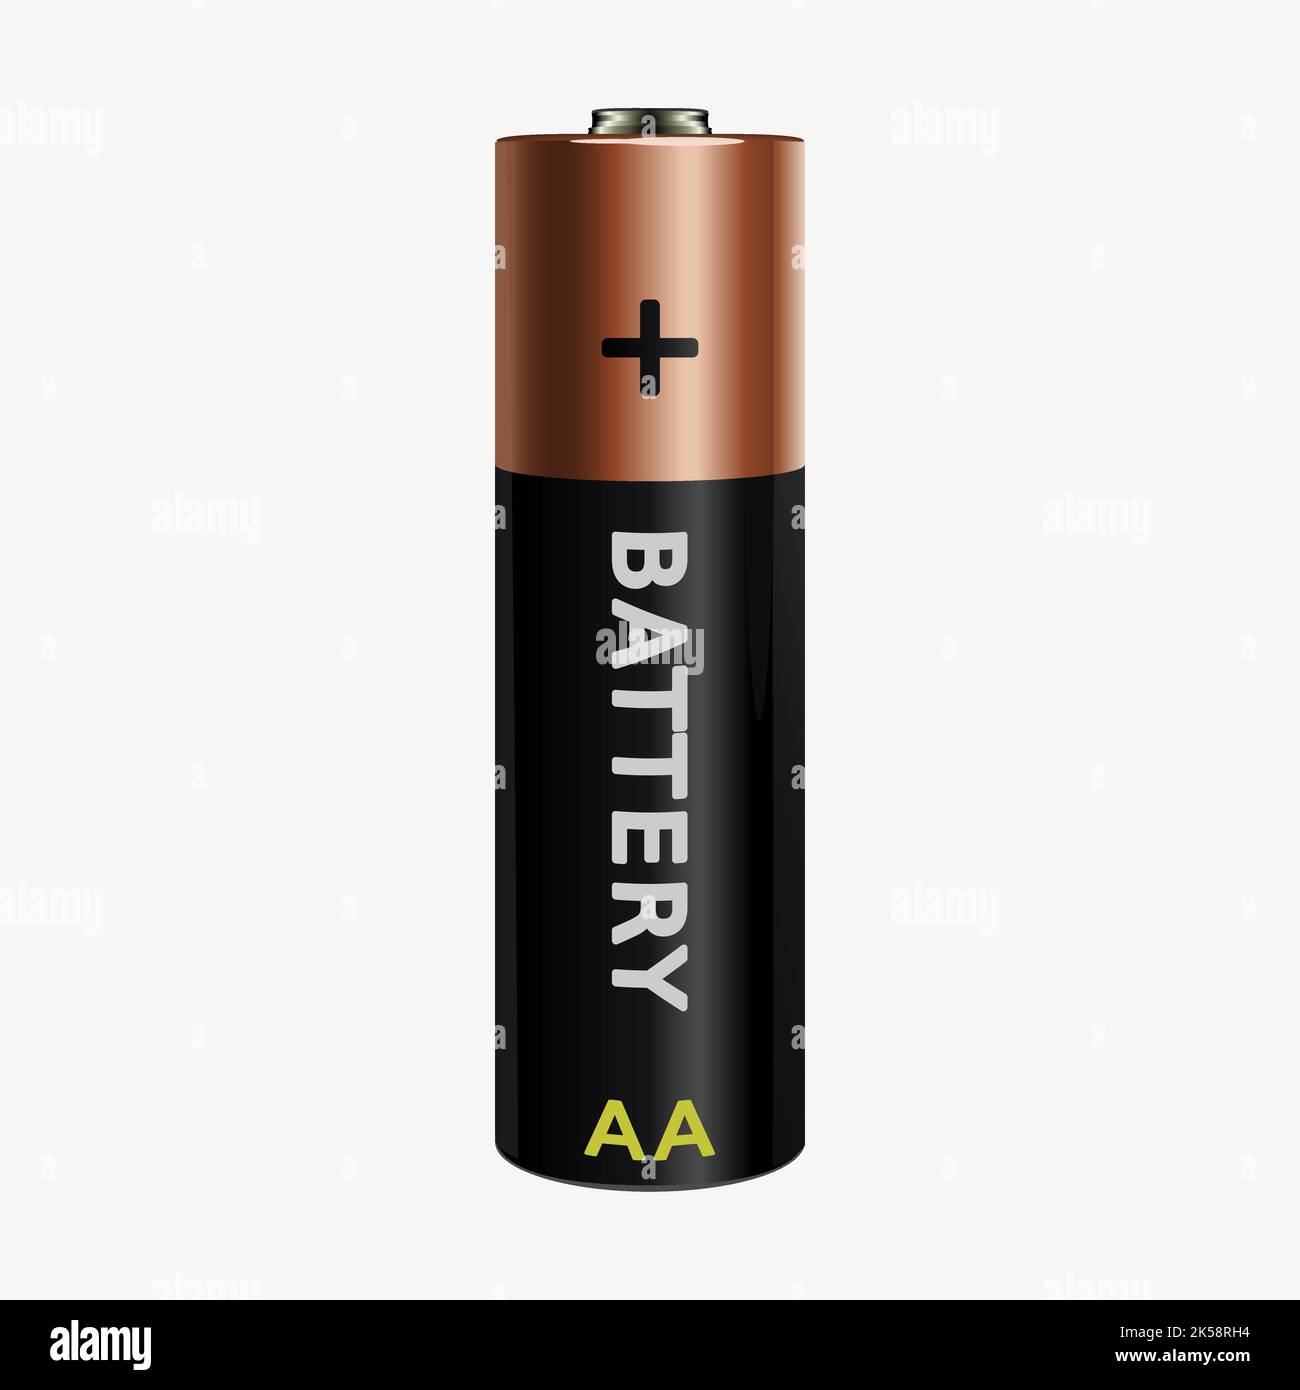 AA battery clipart, illustration vector Stock Vector Image & Art - Alamy